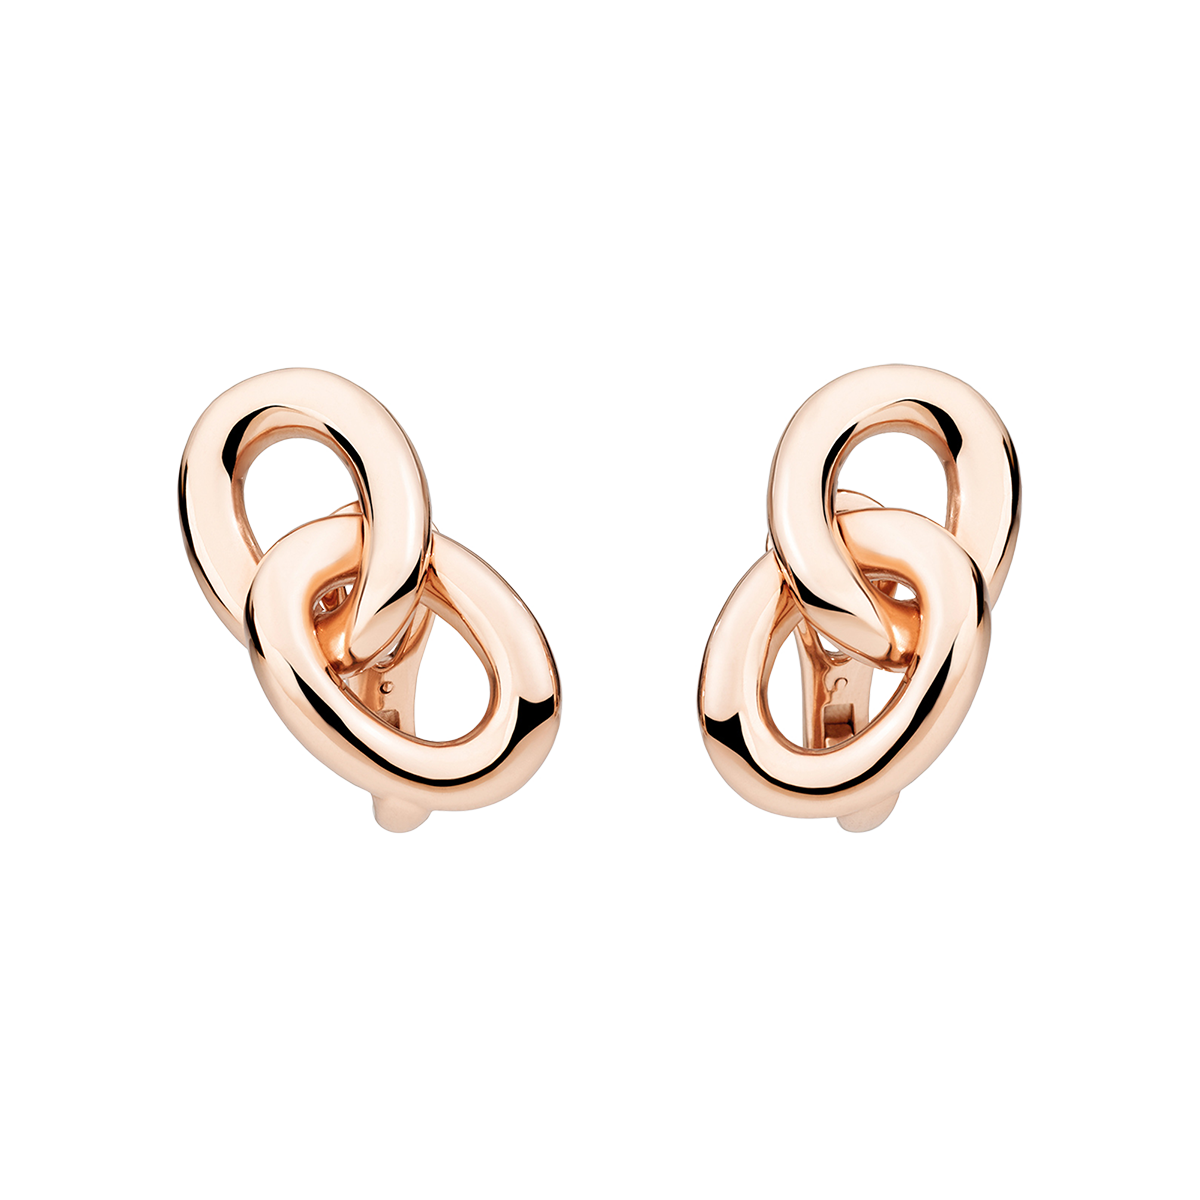 Pomellato Catene earrings